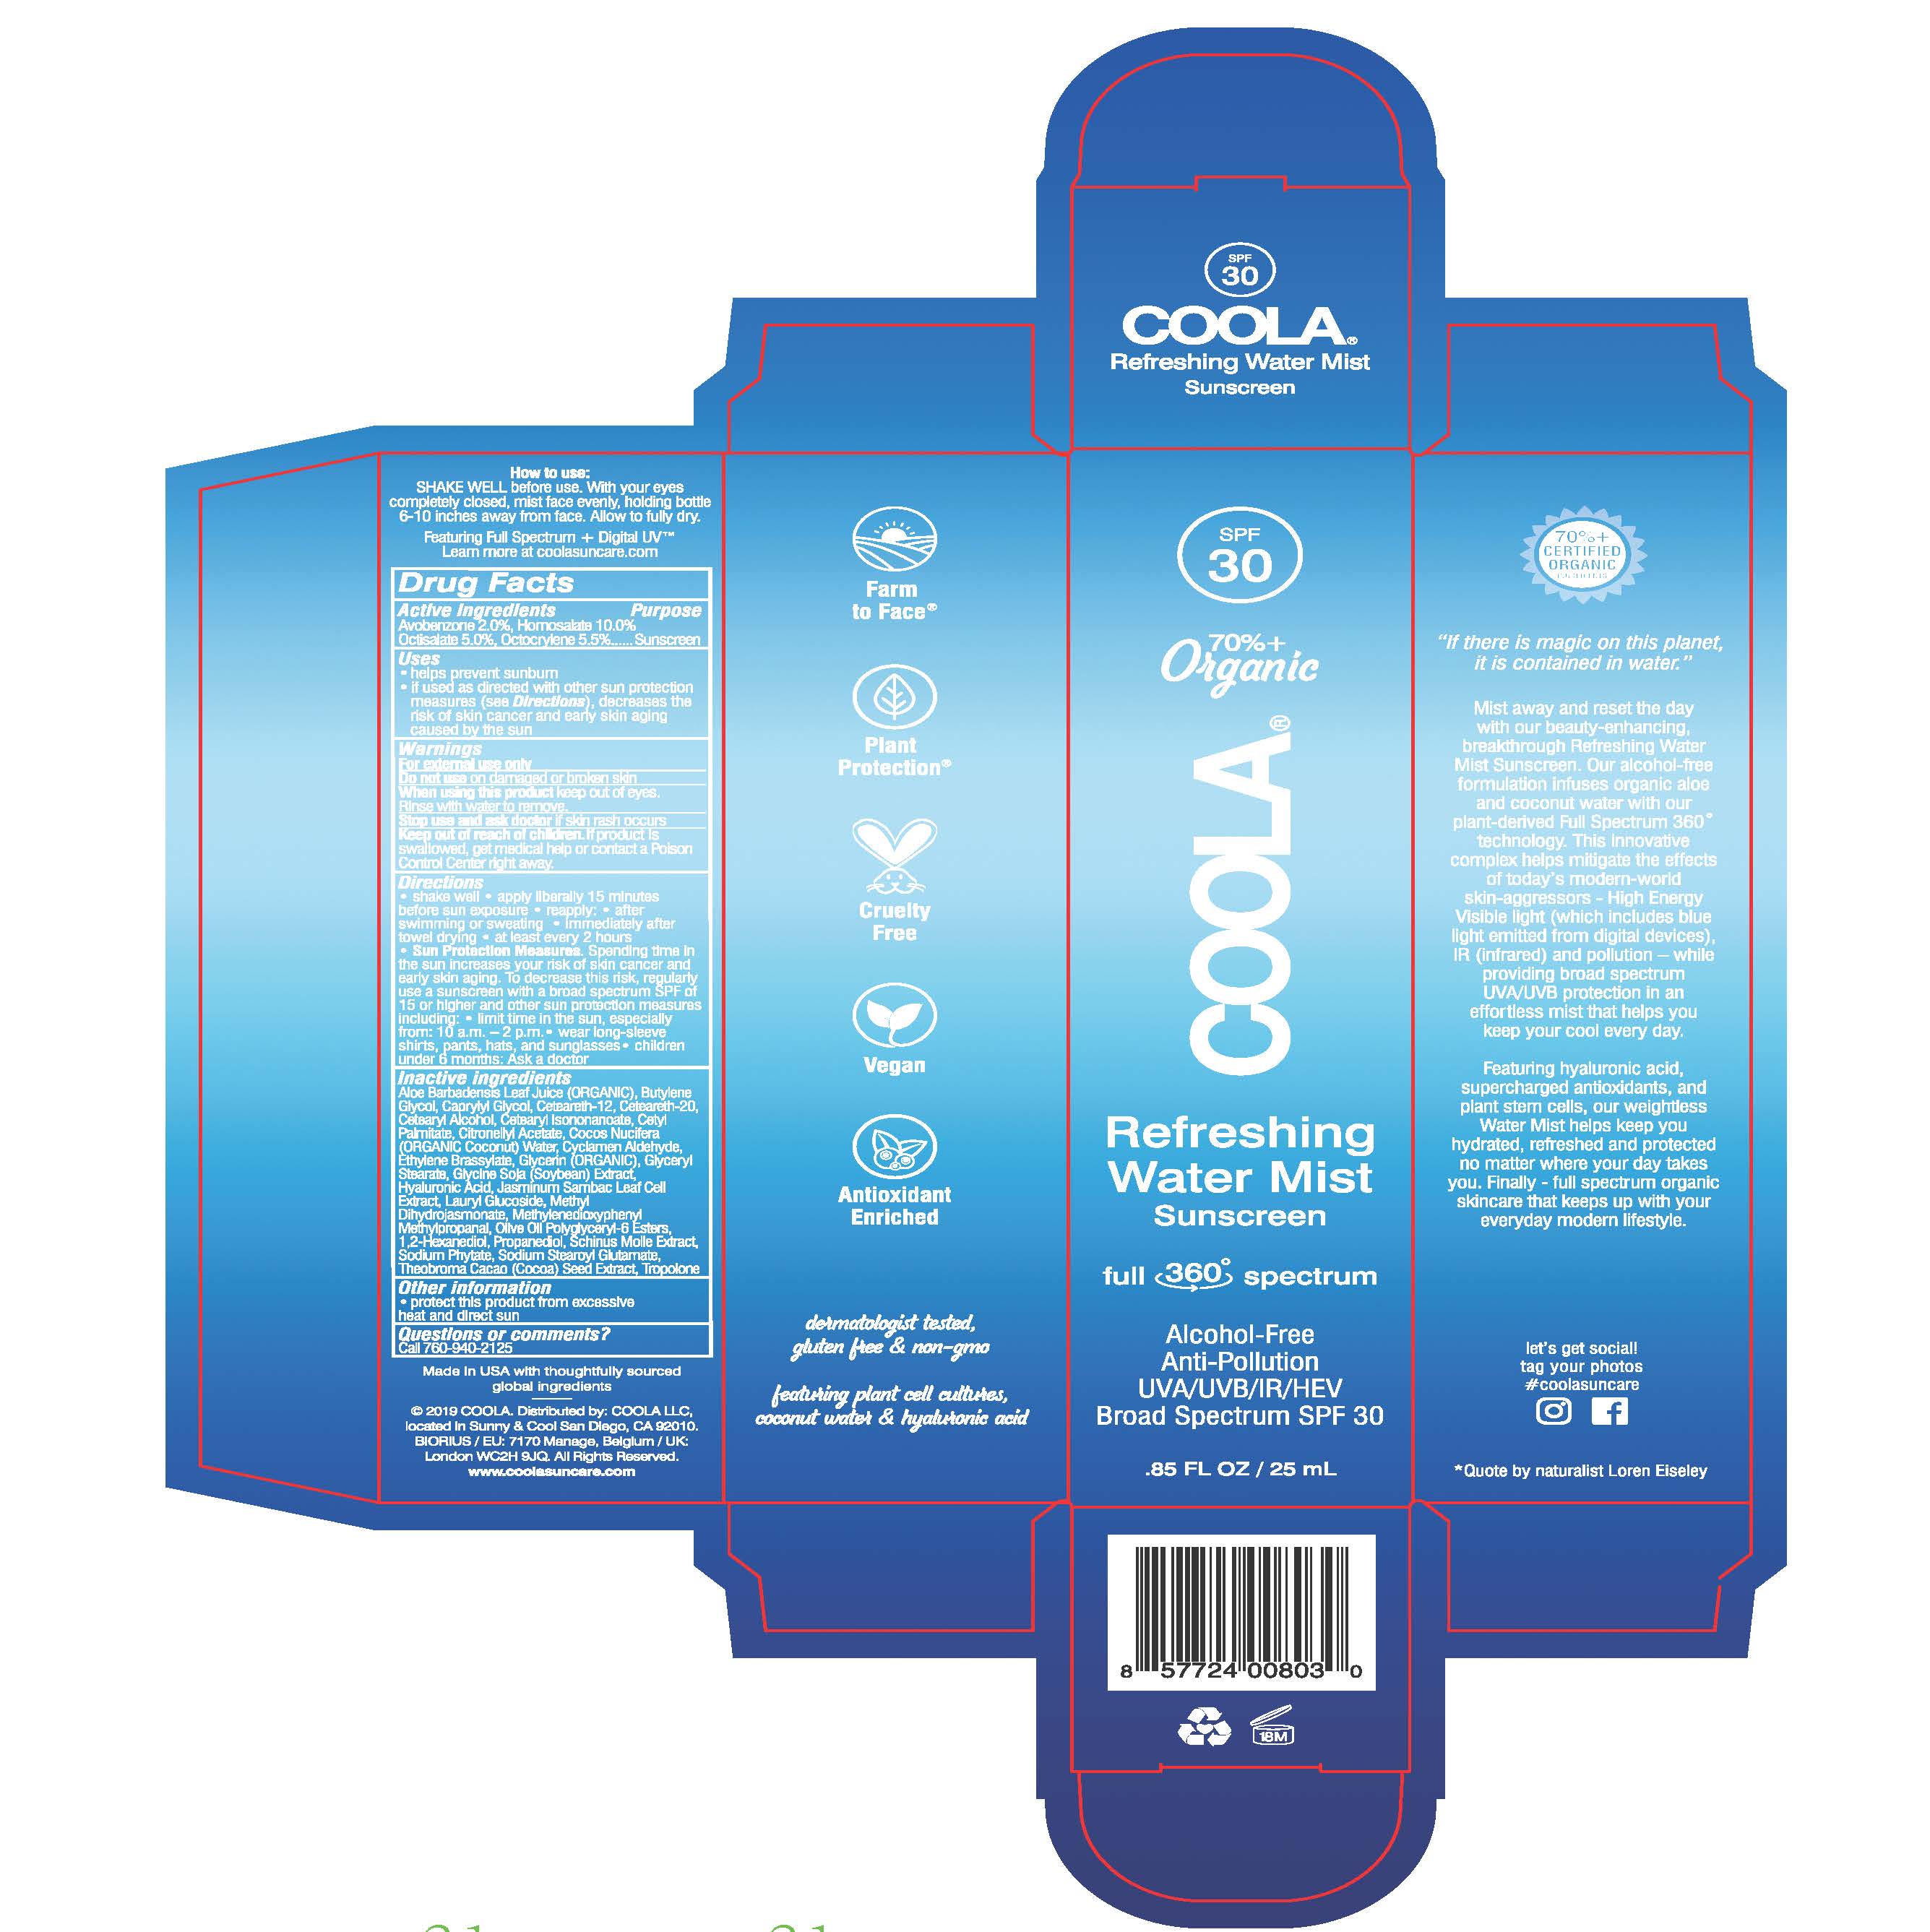 COOLA Refreshing Water Mist Sunscreen SPF 30 25 ml carton